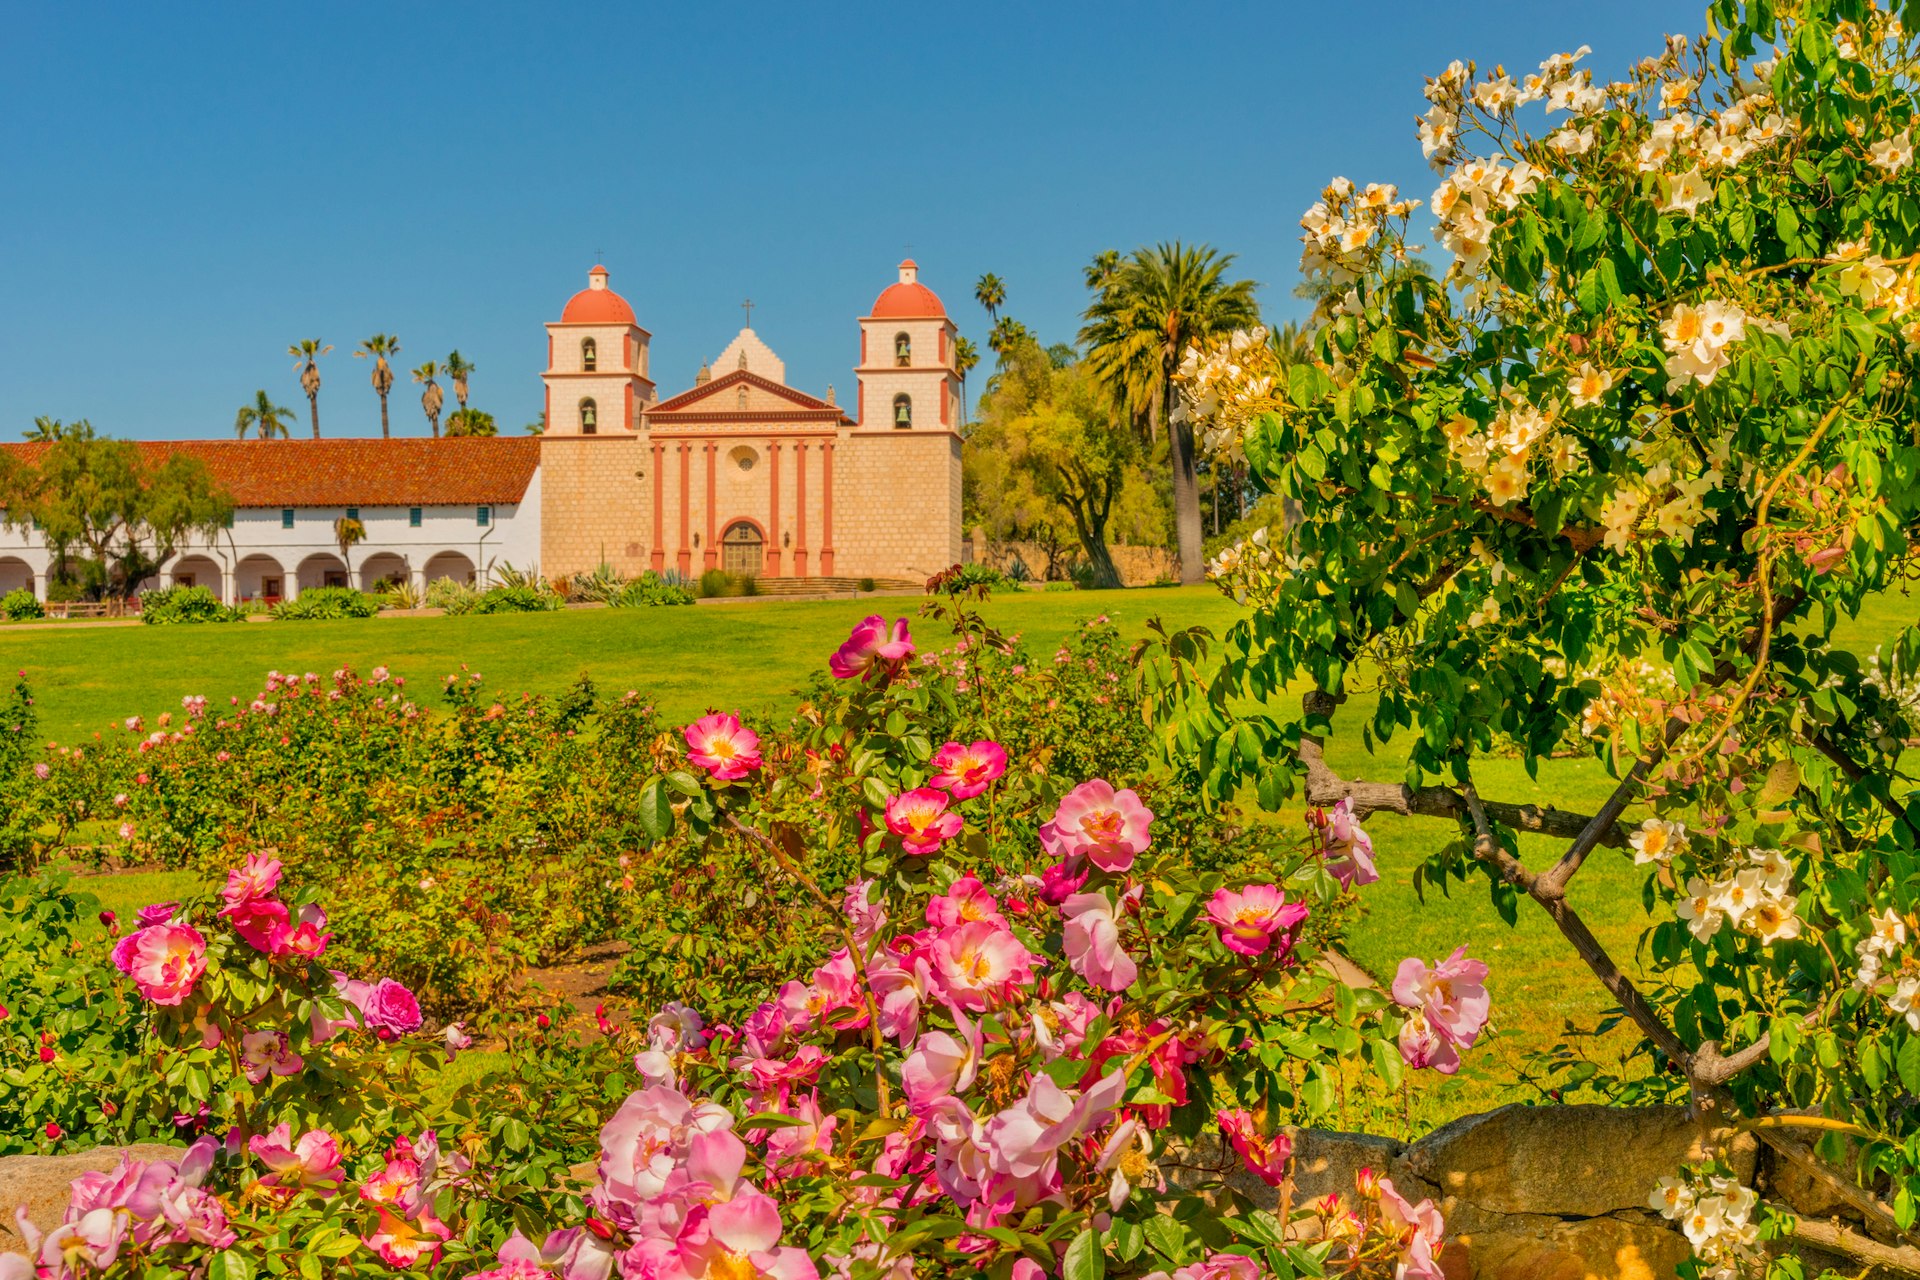 Santa Barbara Mission with Rose Garden